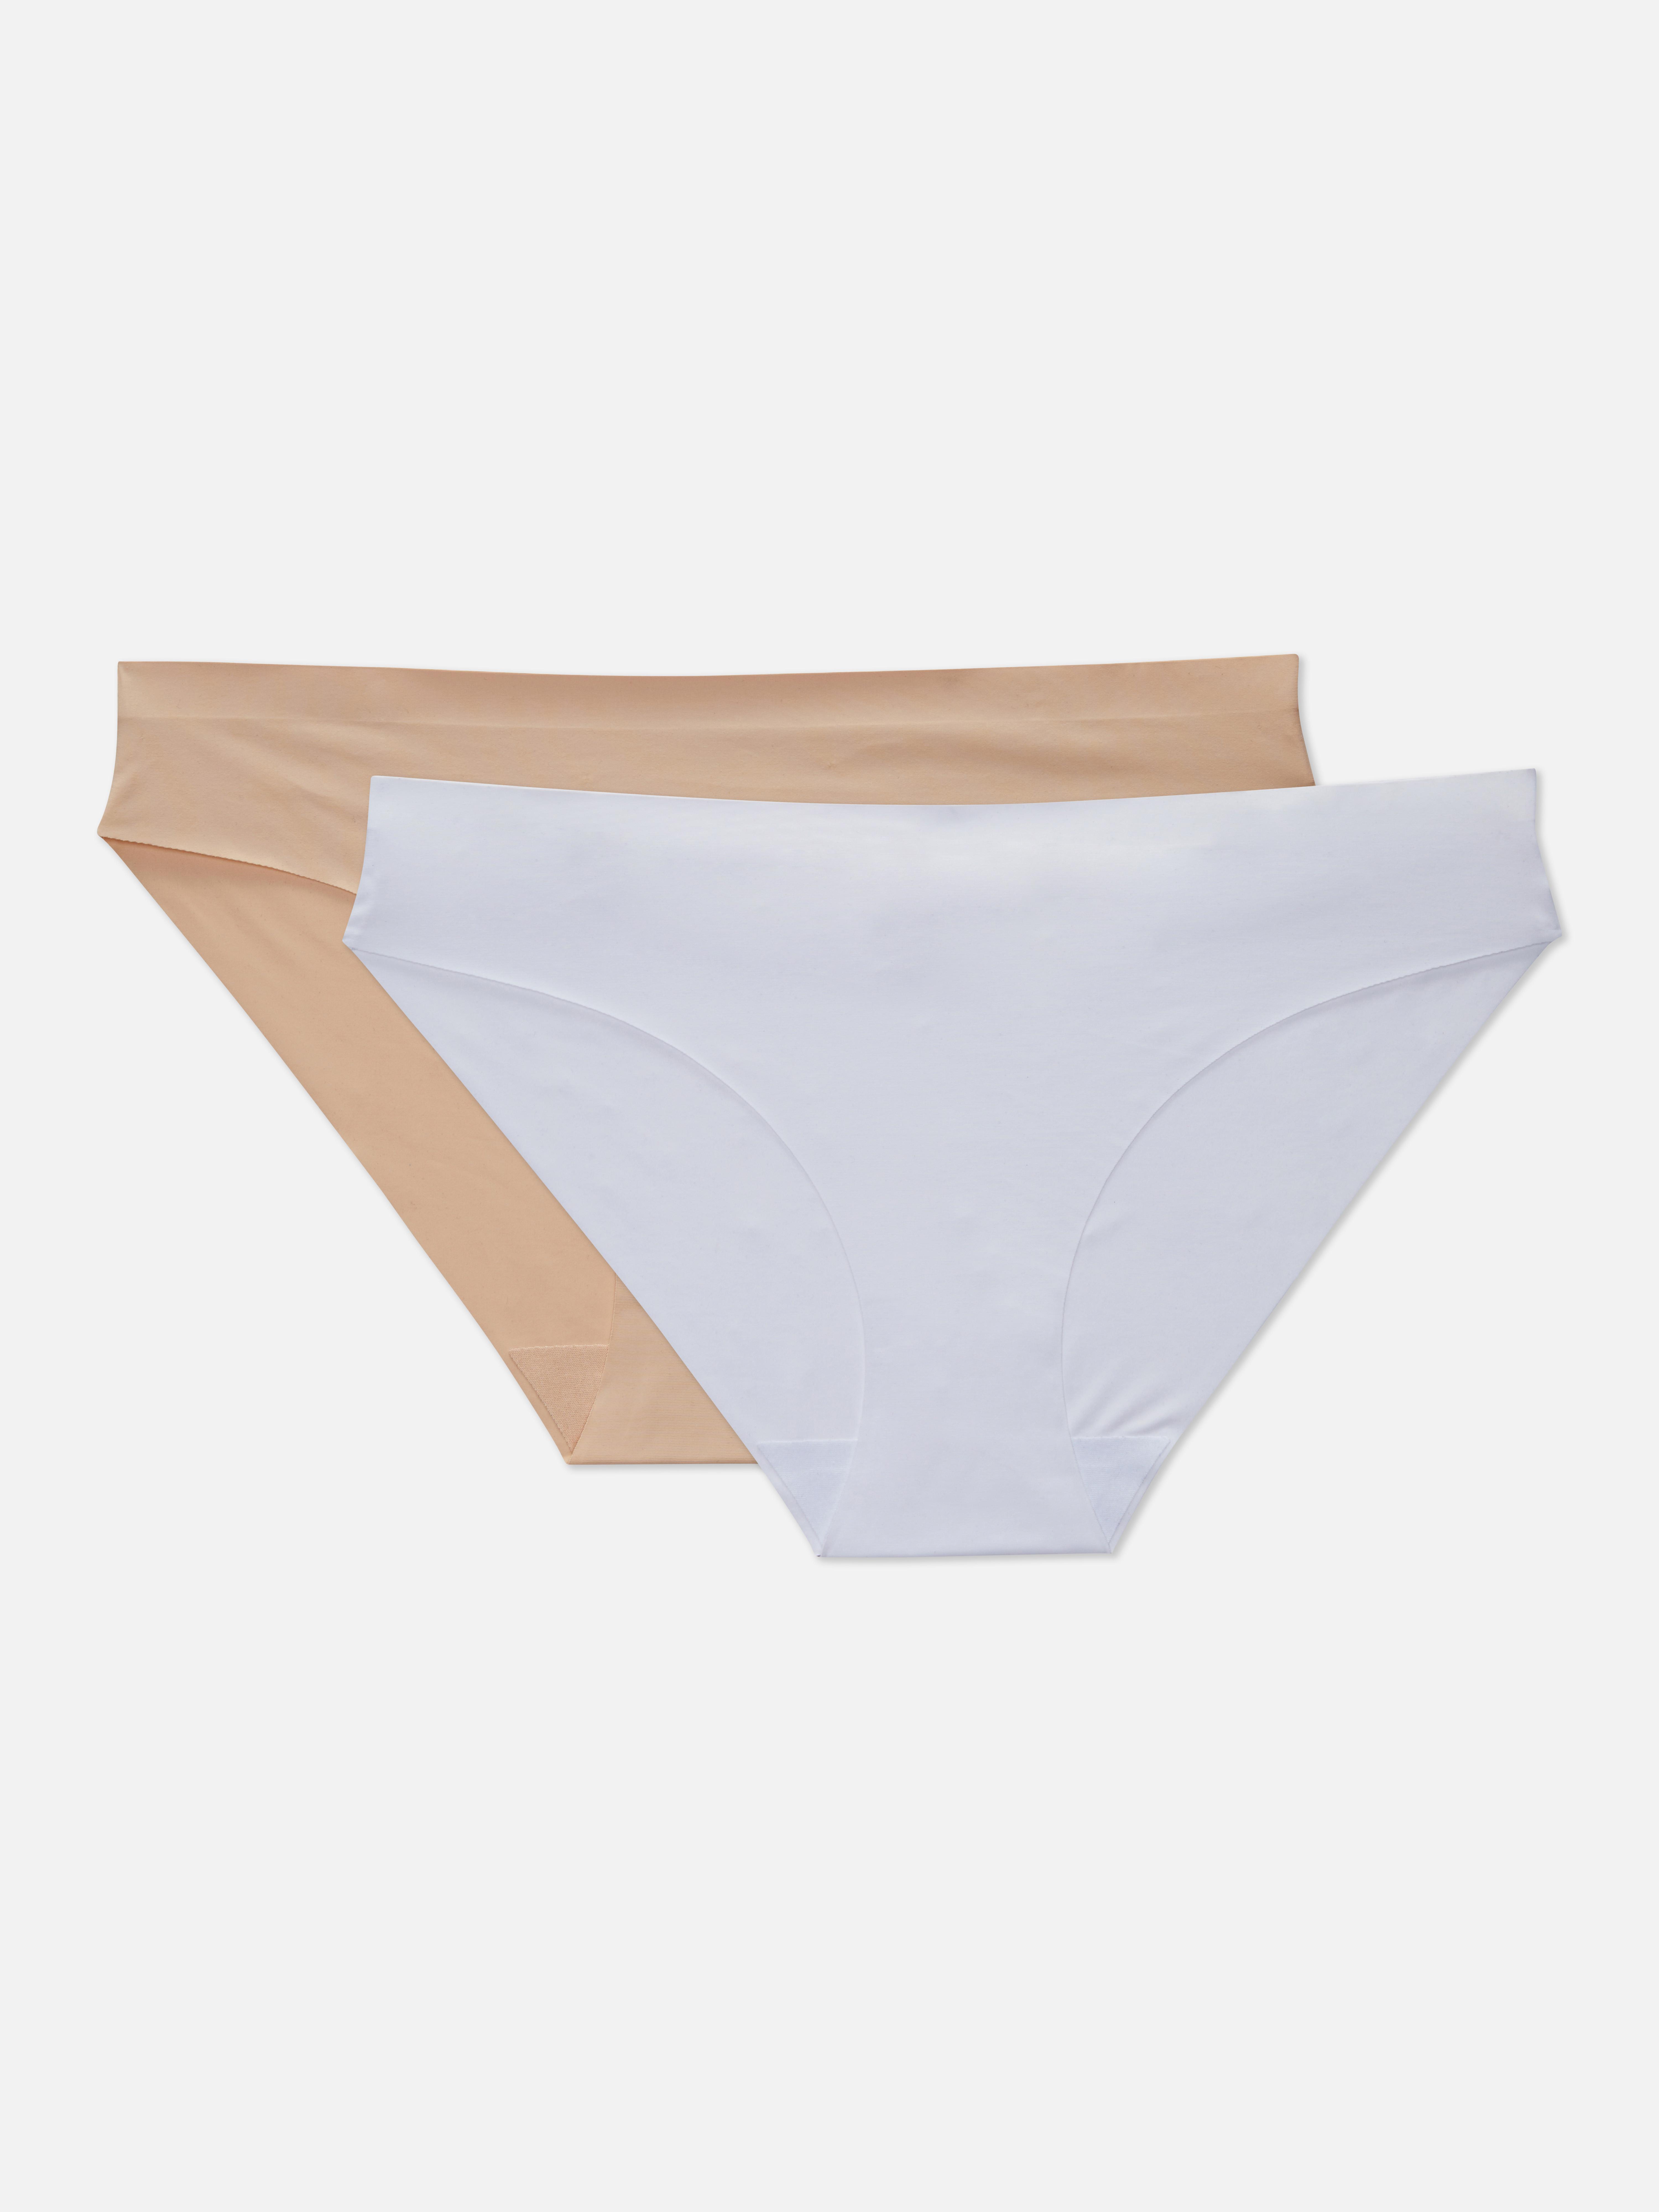 X 3 COTTON Period Mini Brief Knickers Underwear Size 4-6 2XS BNWT Primark  Pants £22.99 - PicClick UK